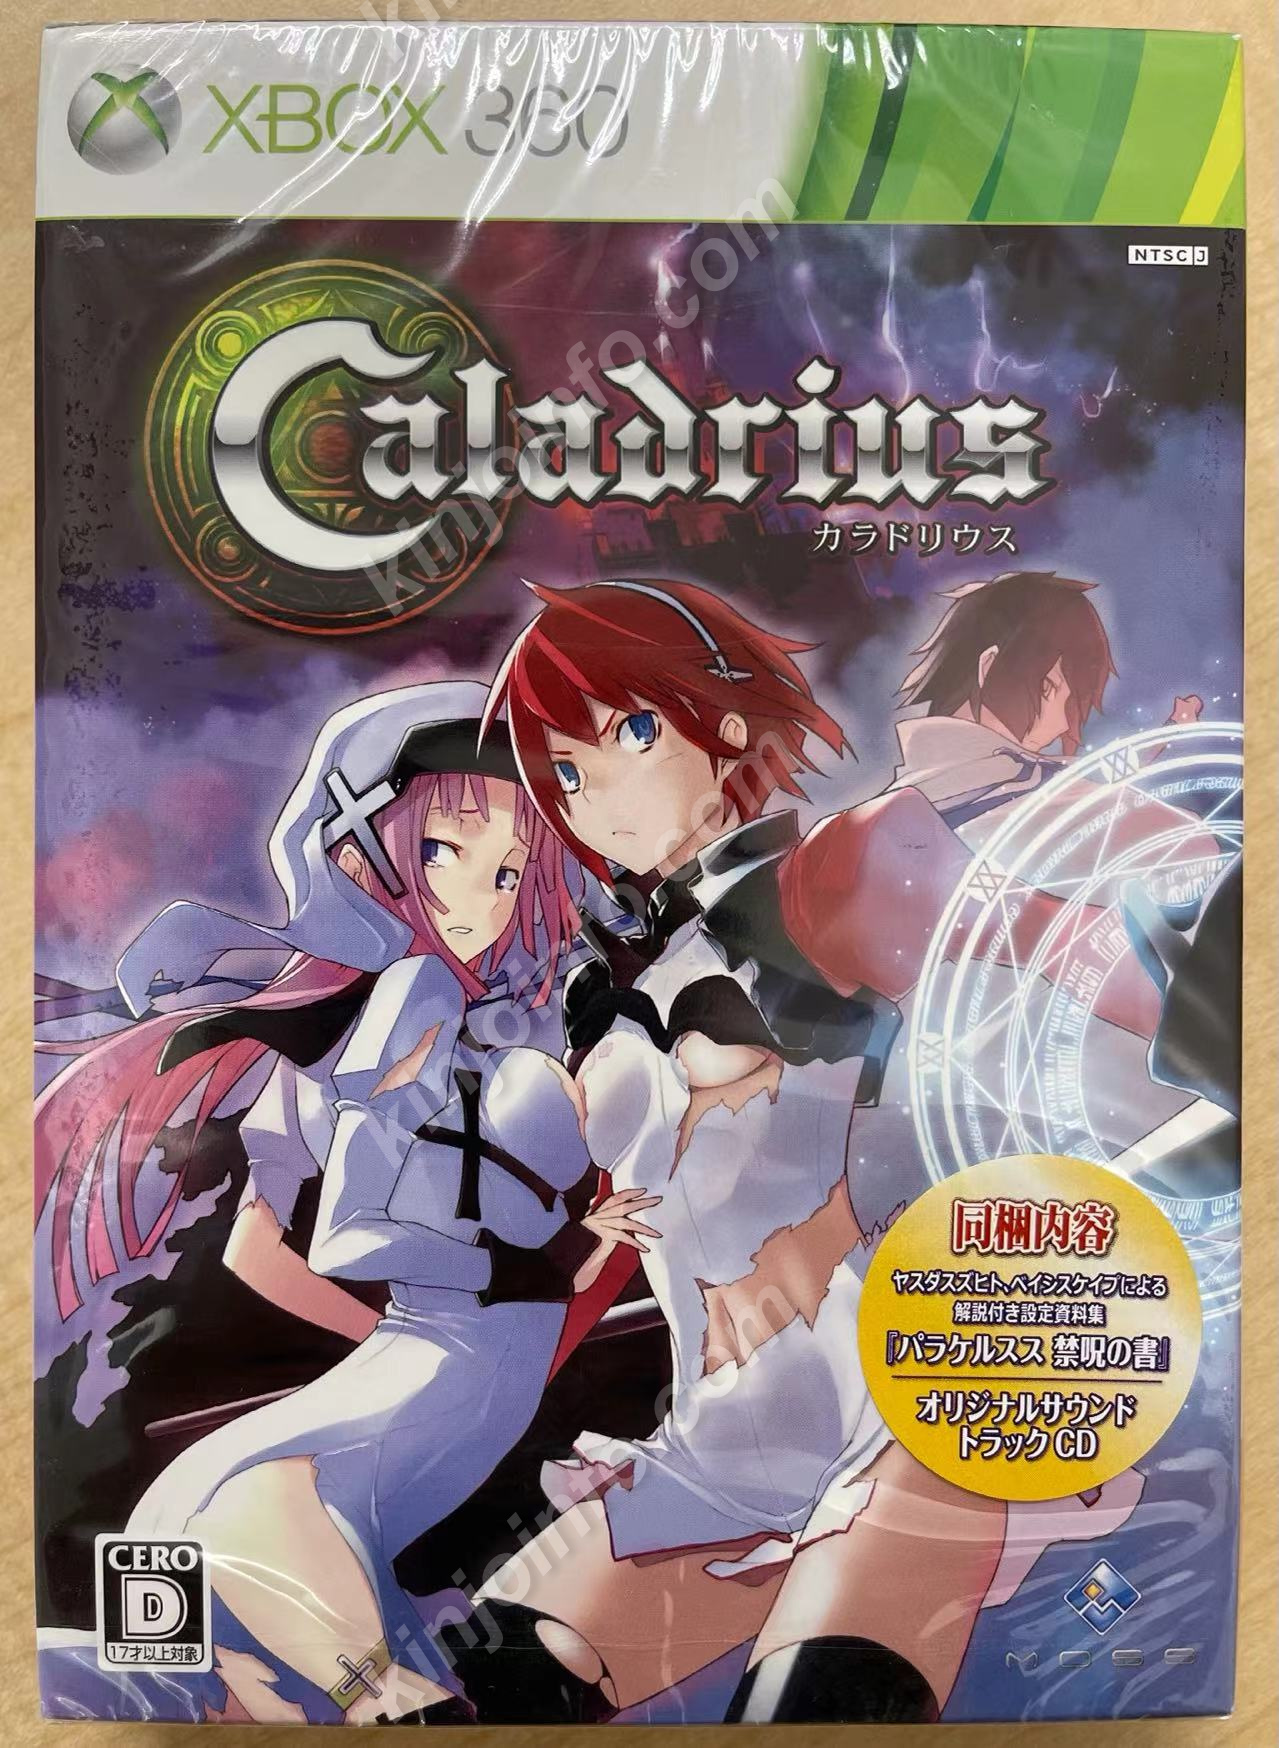 Caladrius (カラドリウス) 【新品未開封・限定版・xbox360日本版】